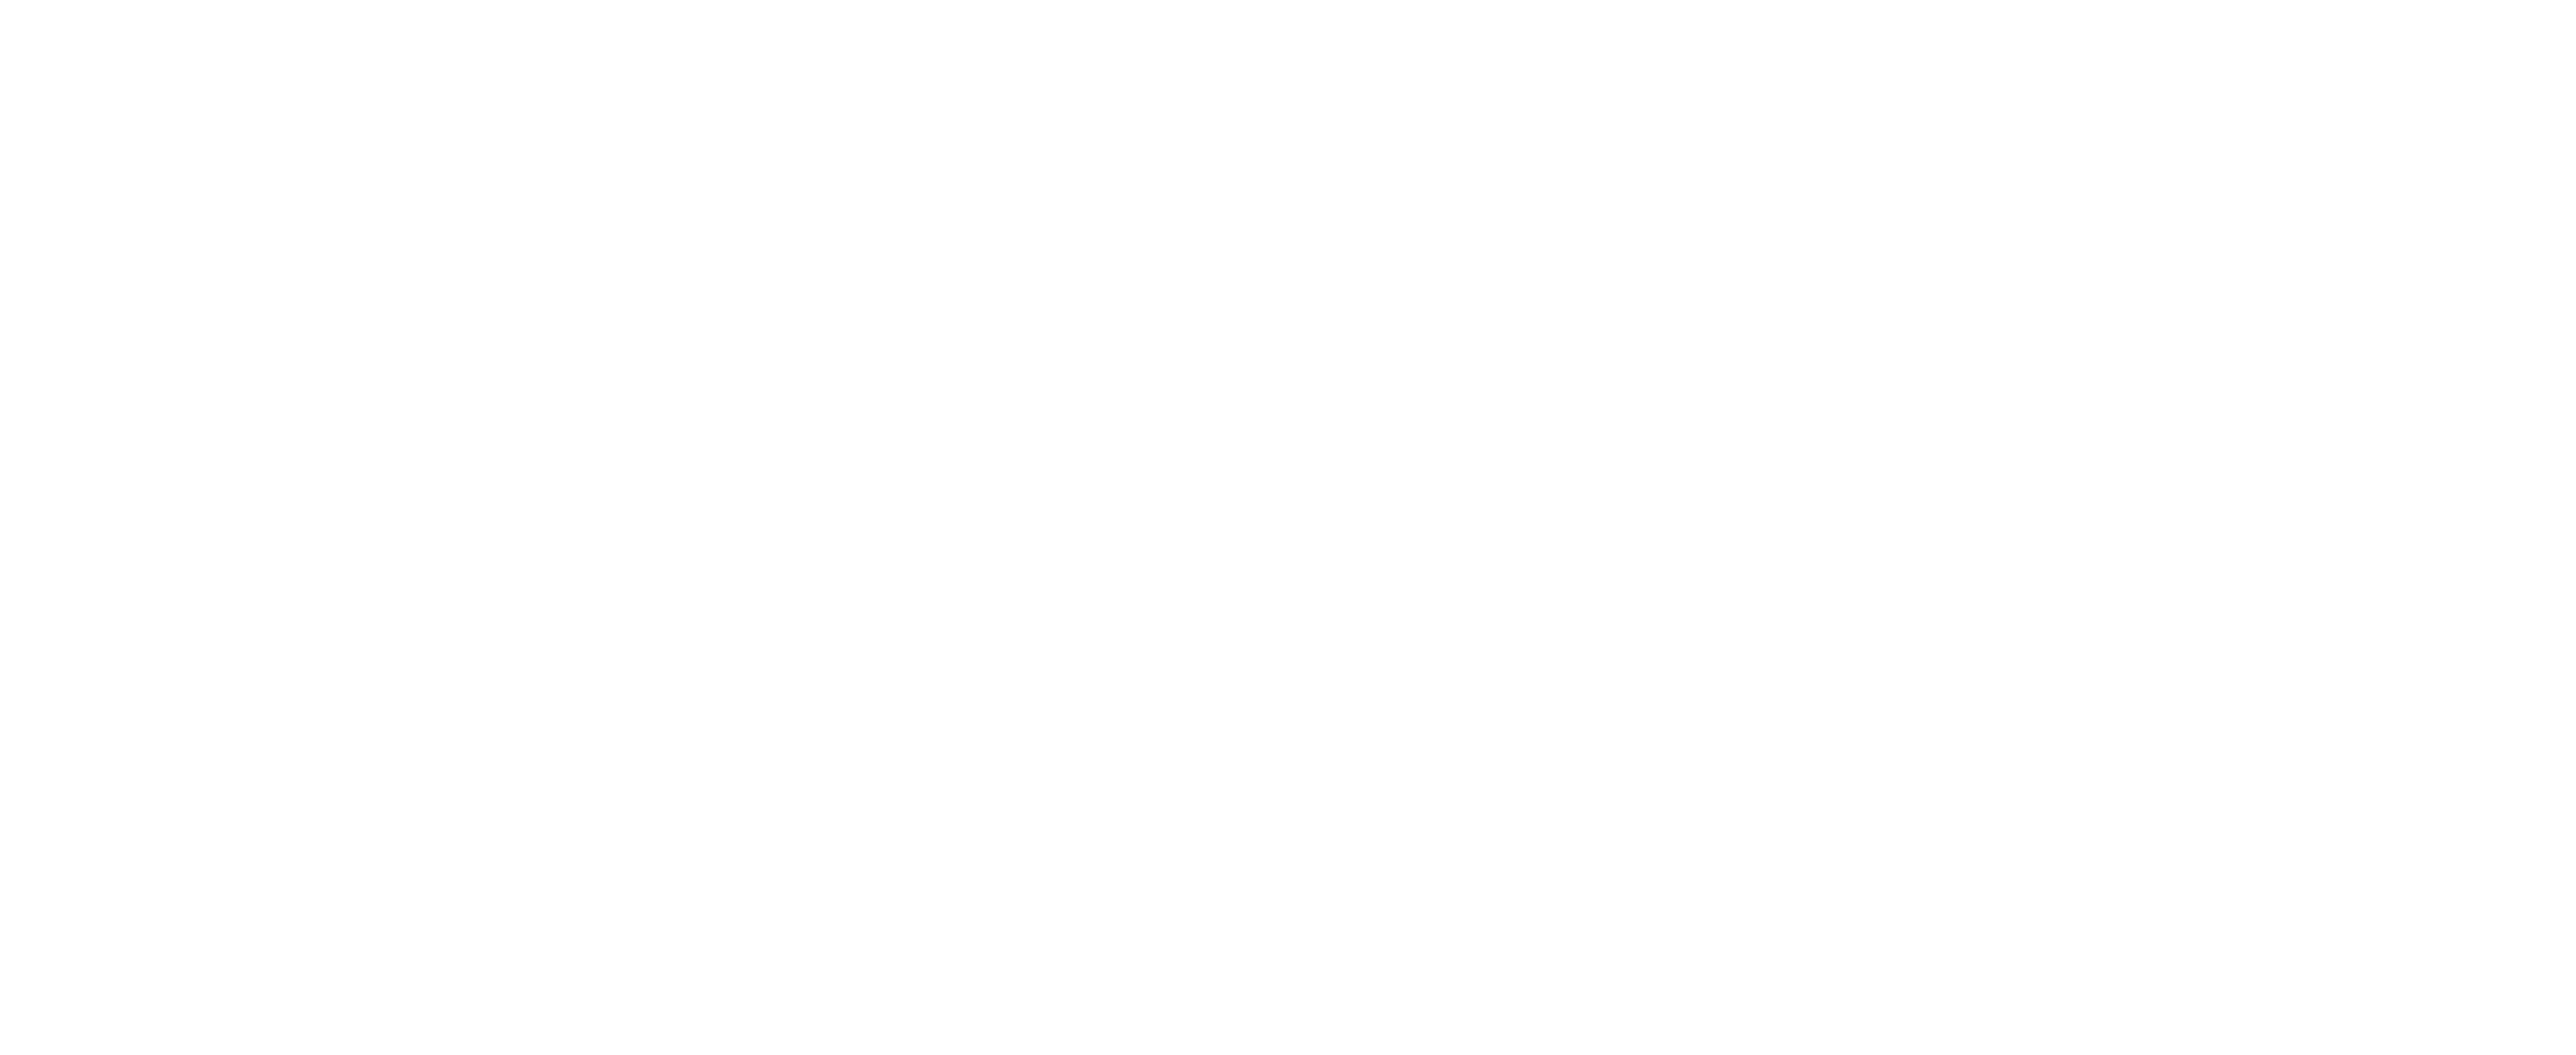 MaxLife Events